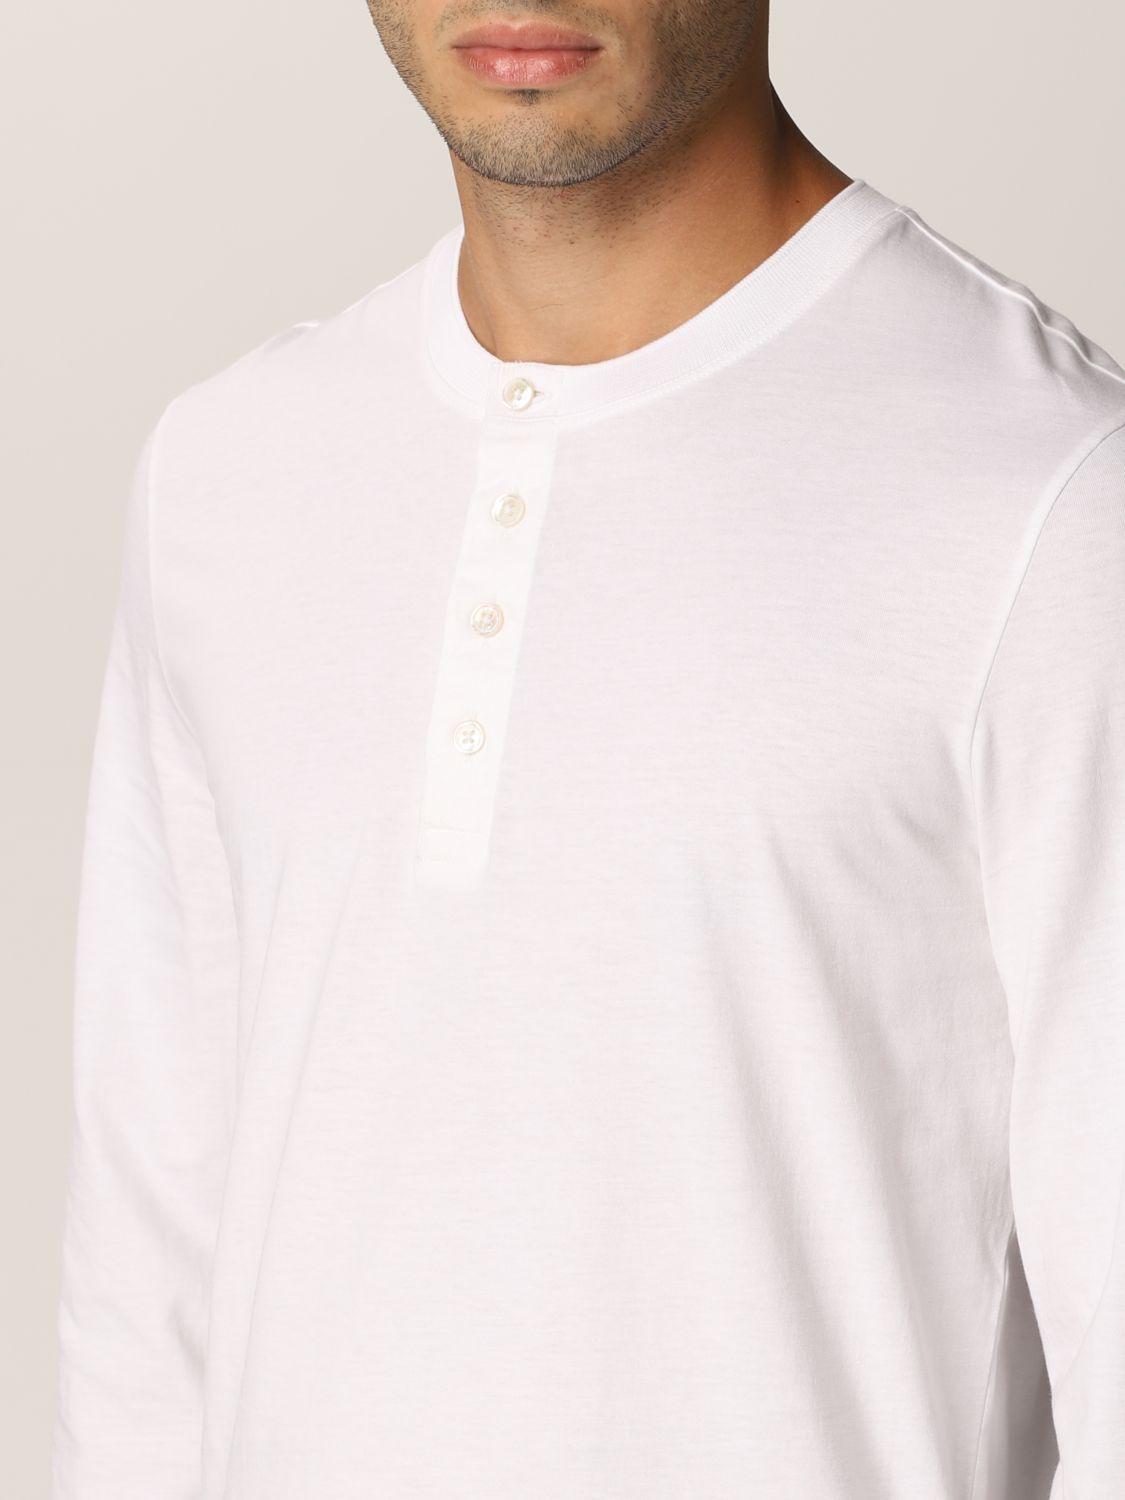 Polo Tom Ford: Camiseta hombre Tom Ford blanco 5